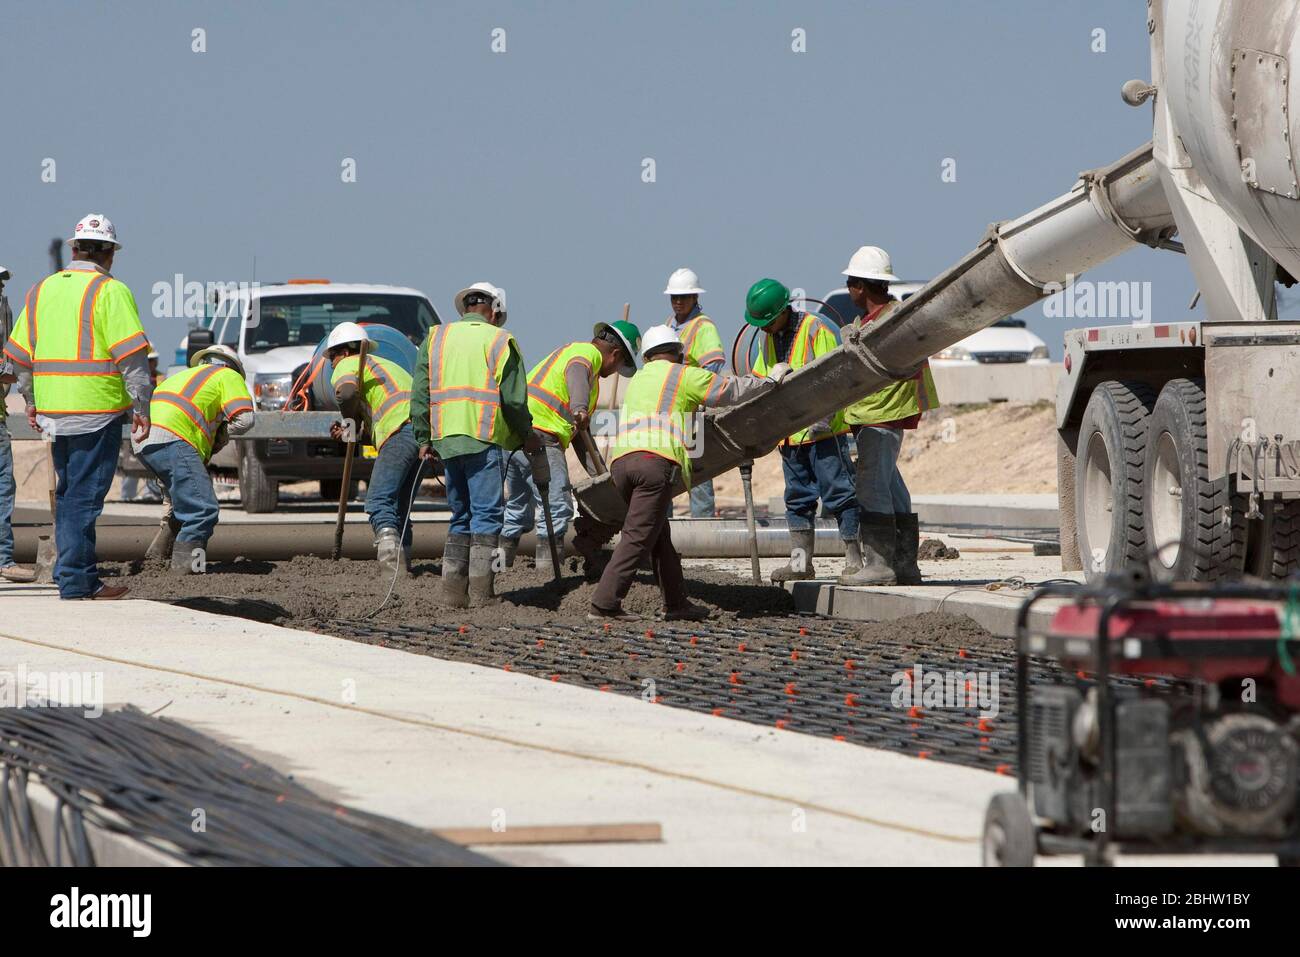 Austin Texas USA, April 6, 2011:Workers pour concrete onto roadway during highway construction project. ©Marjorie Kamys Cotera/Daemmrich Photography Stock Photo